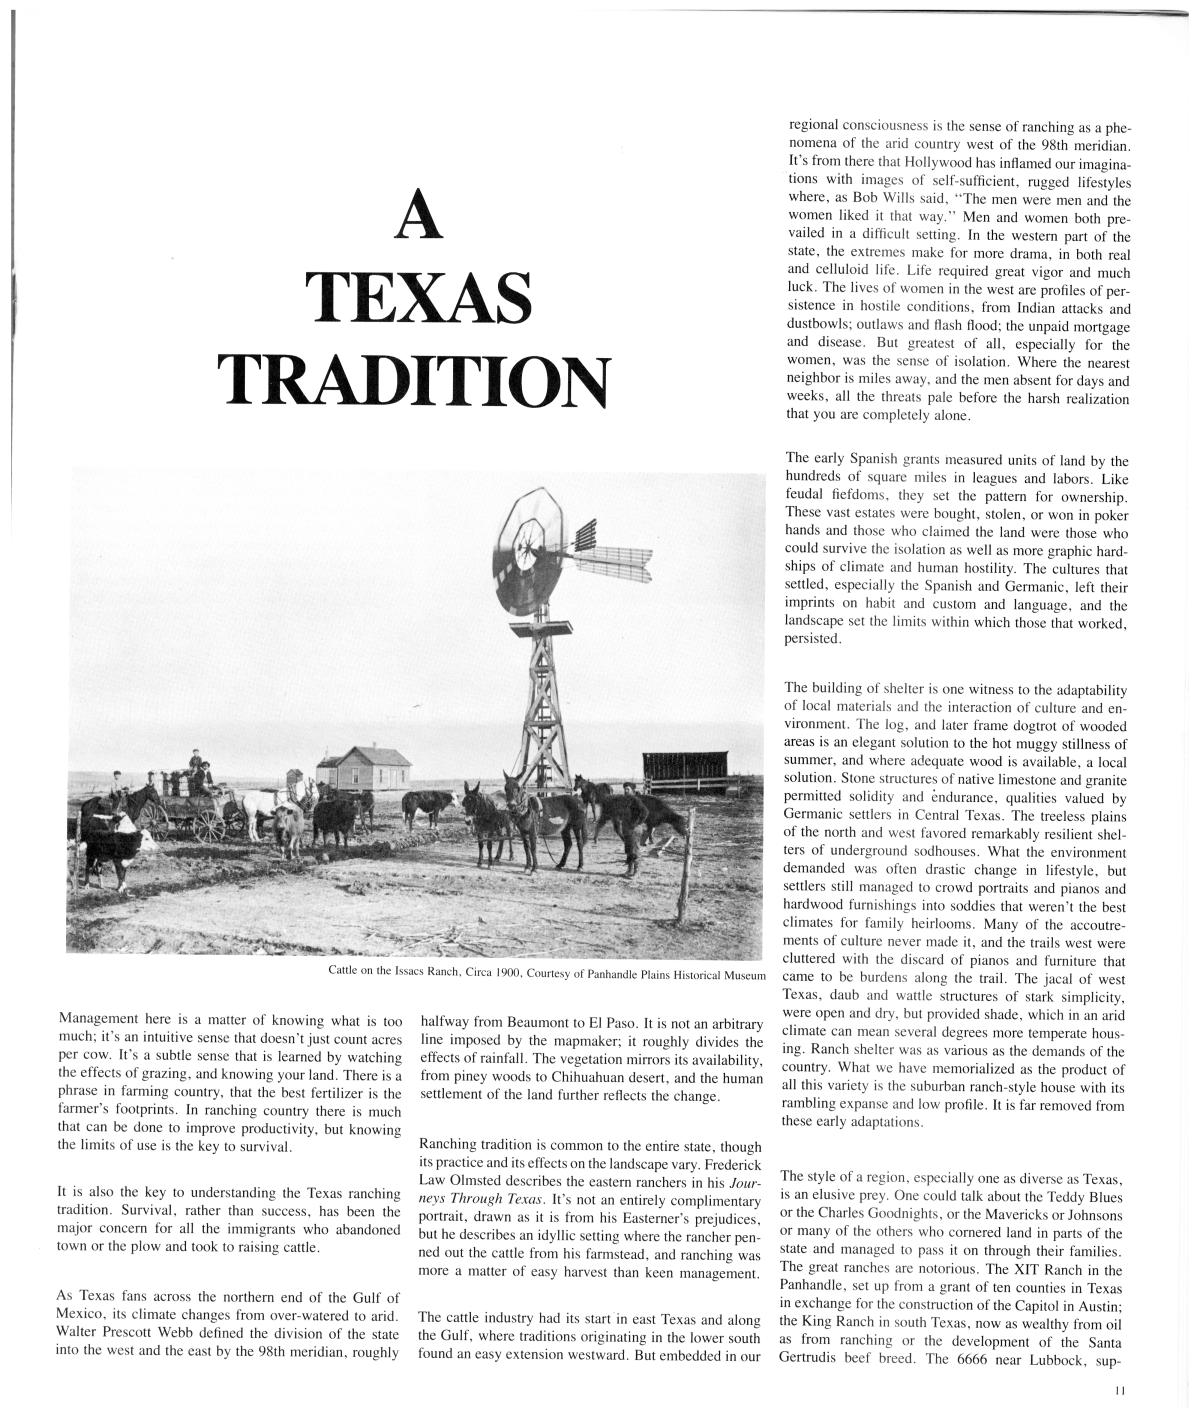 Texas Heritage, Fall 1984
                                                
                                                    11
                                                